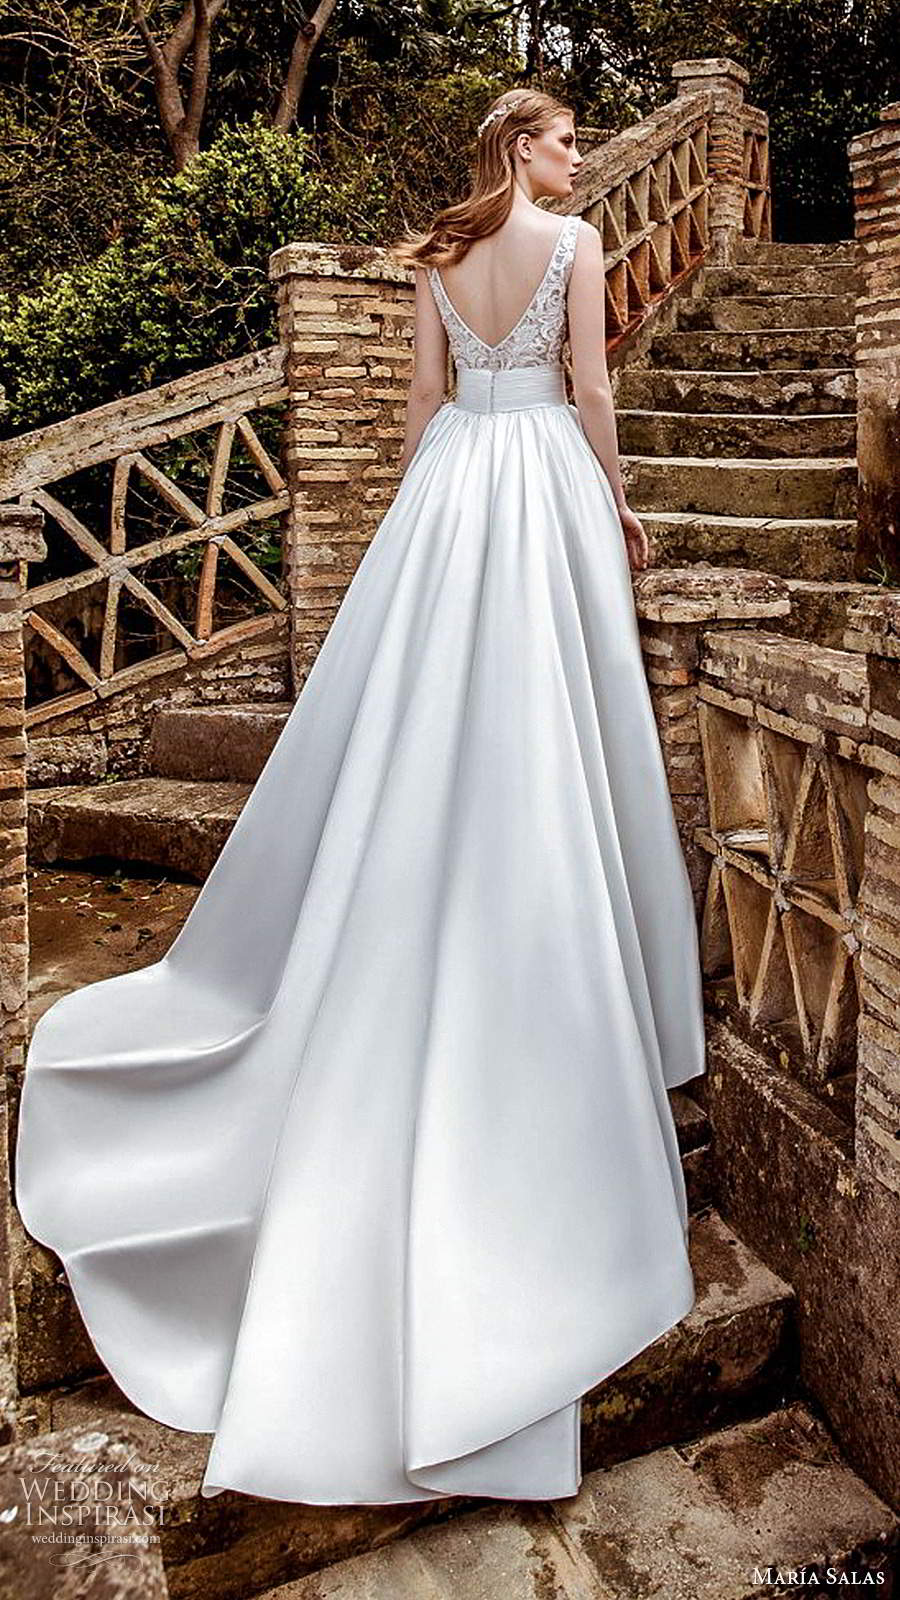 maria salas 2019 bridal sleeveless straps plunging v neckline embellished bodice a line short wedding dress ball gown overskirt (23) bv